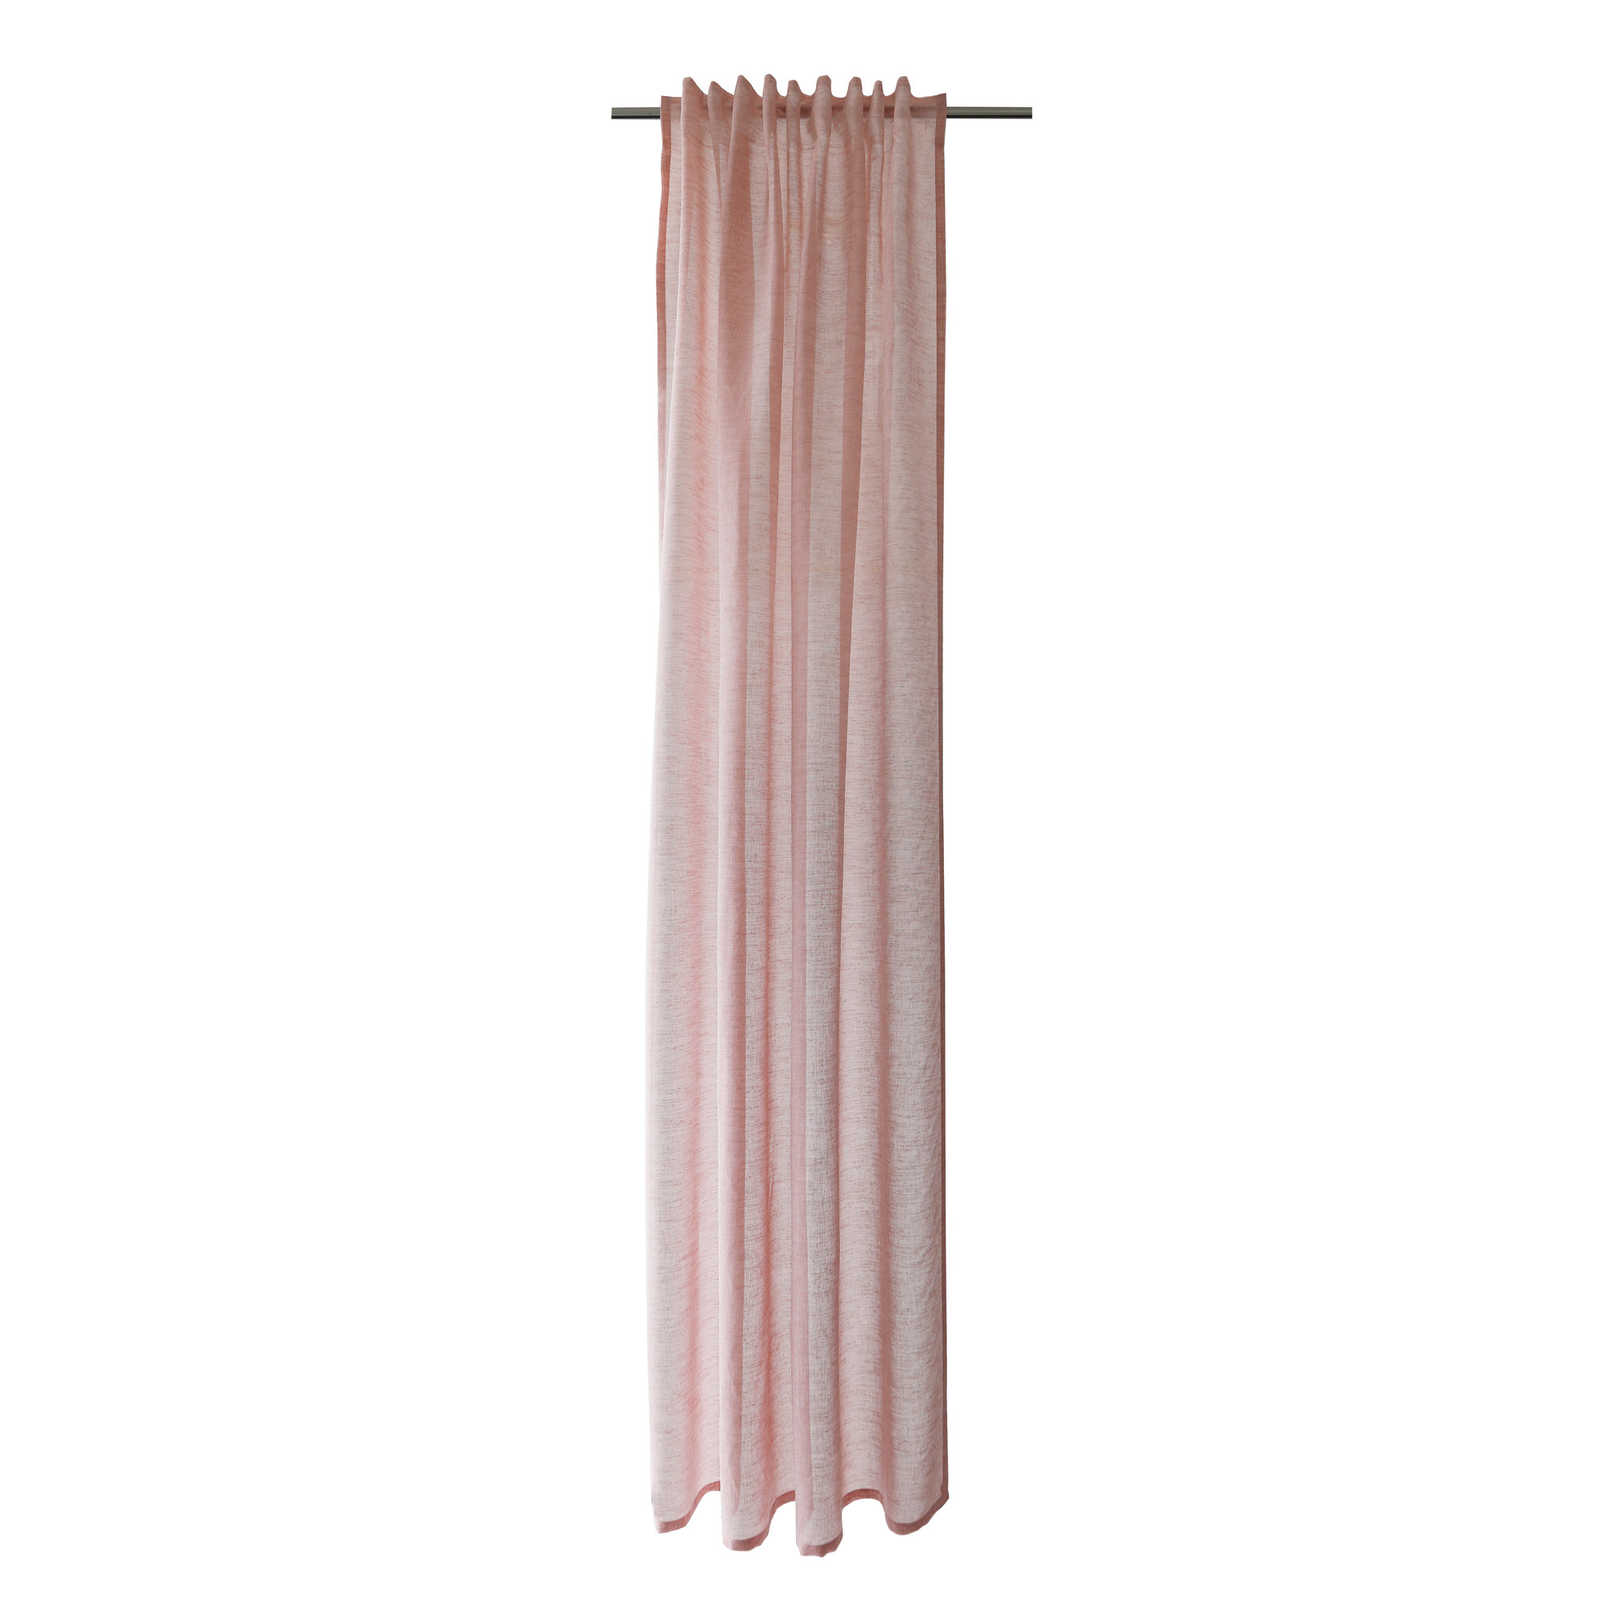         Decorative Loop Scarf 140 cm x 245 cm Artificial Fibre Pink
    